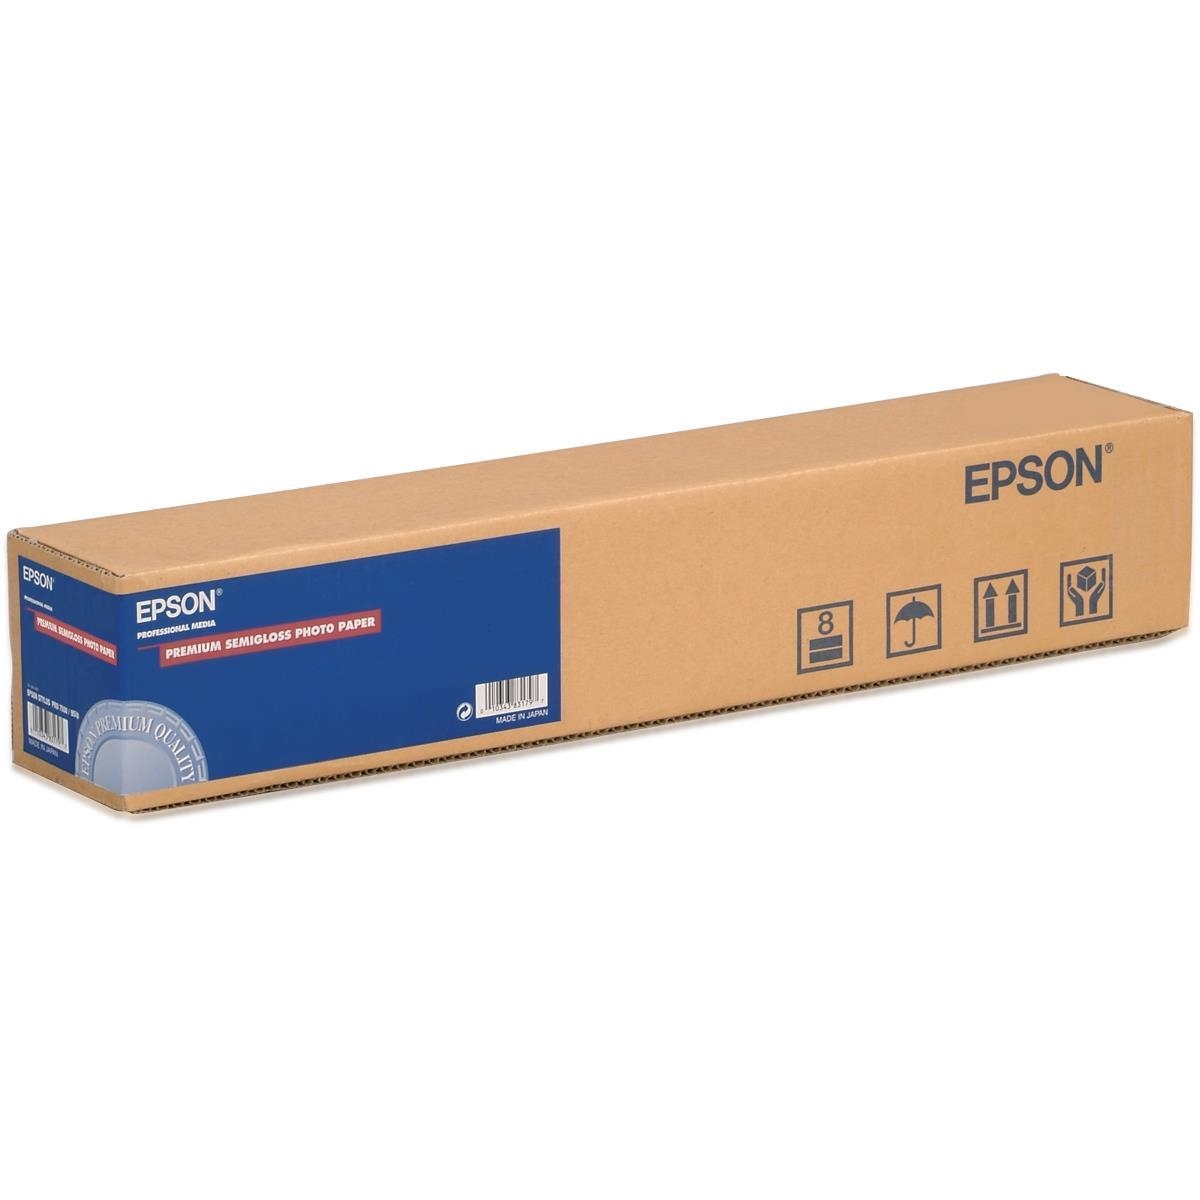 Original Epson S041393 165gsm 24in x 100ft Photo Paper Roll (C13S041393)